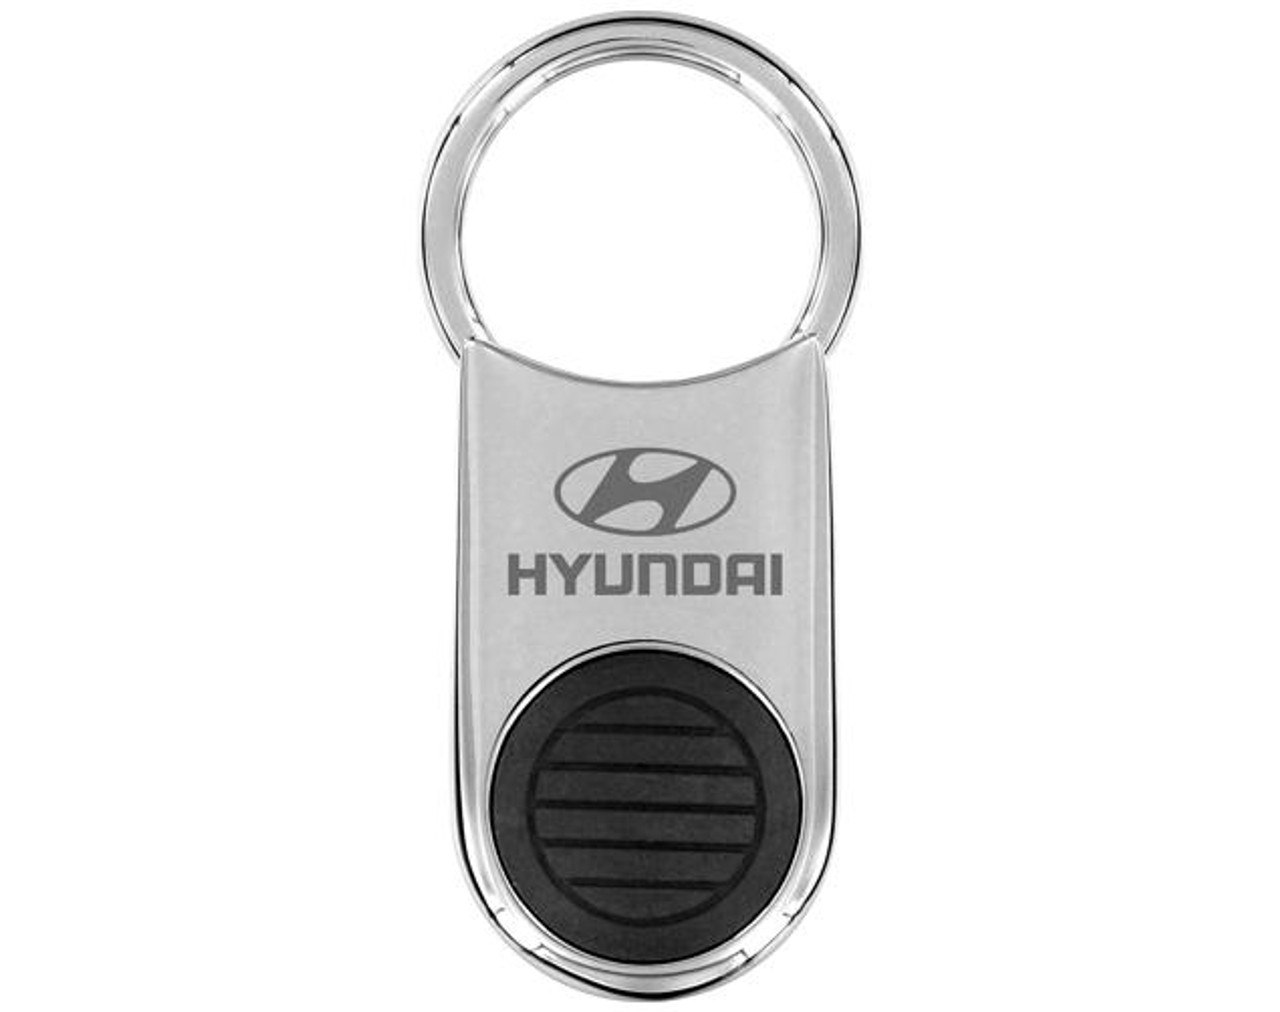 Hyundai Photo-frame keychain With Crystals